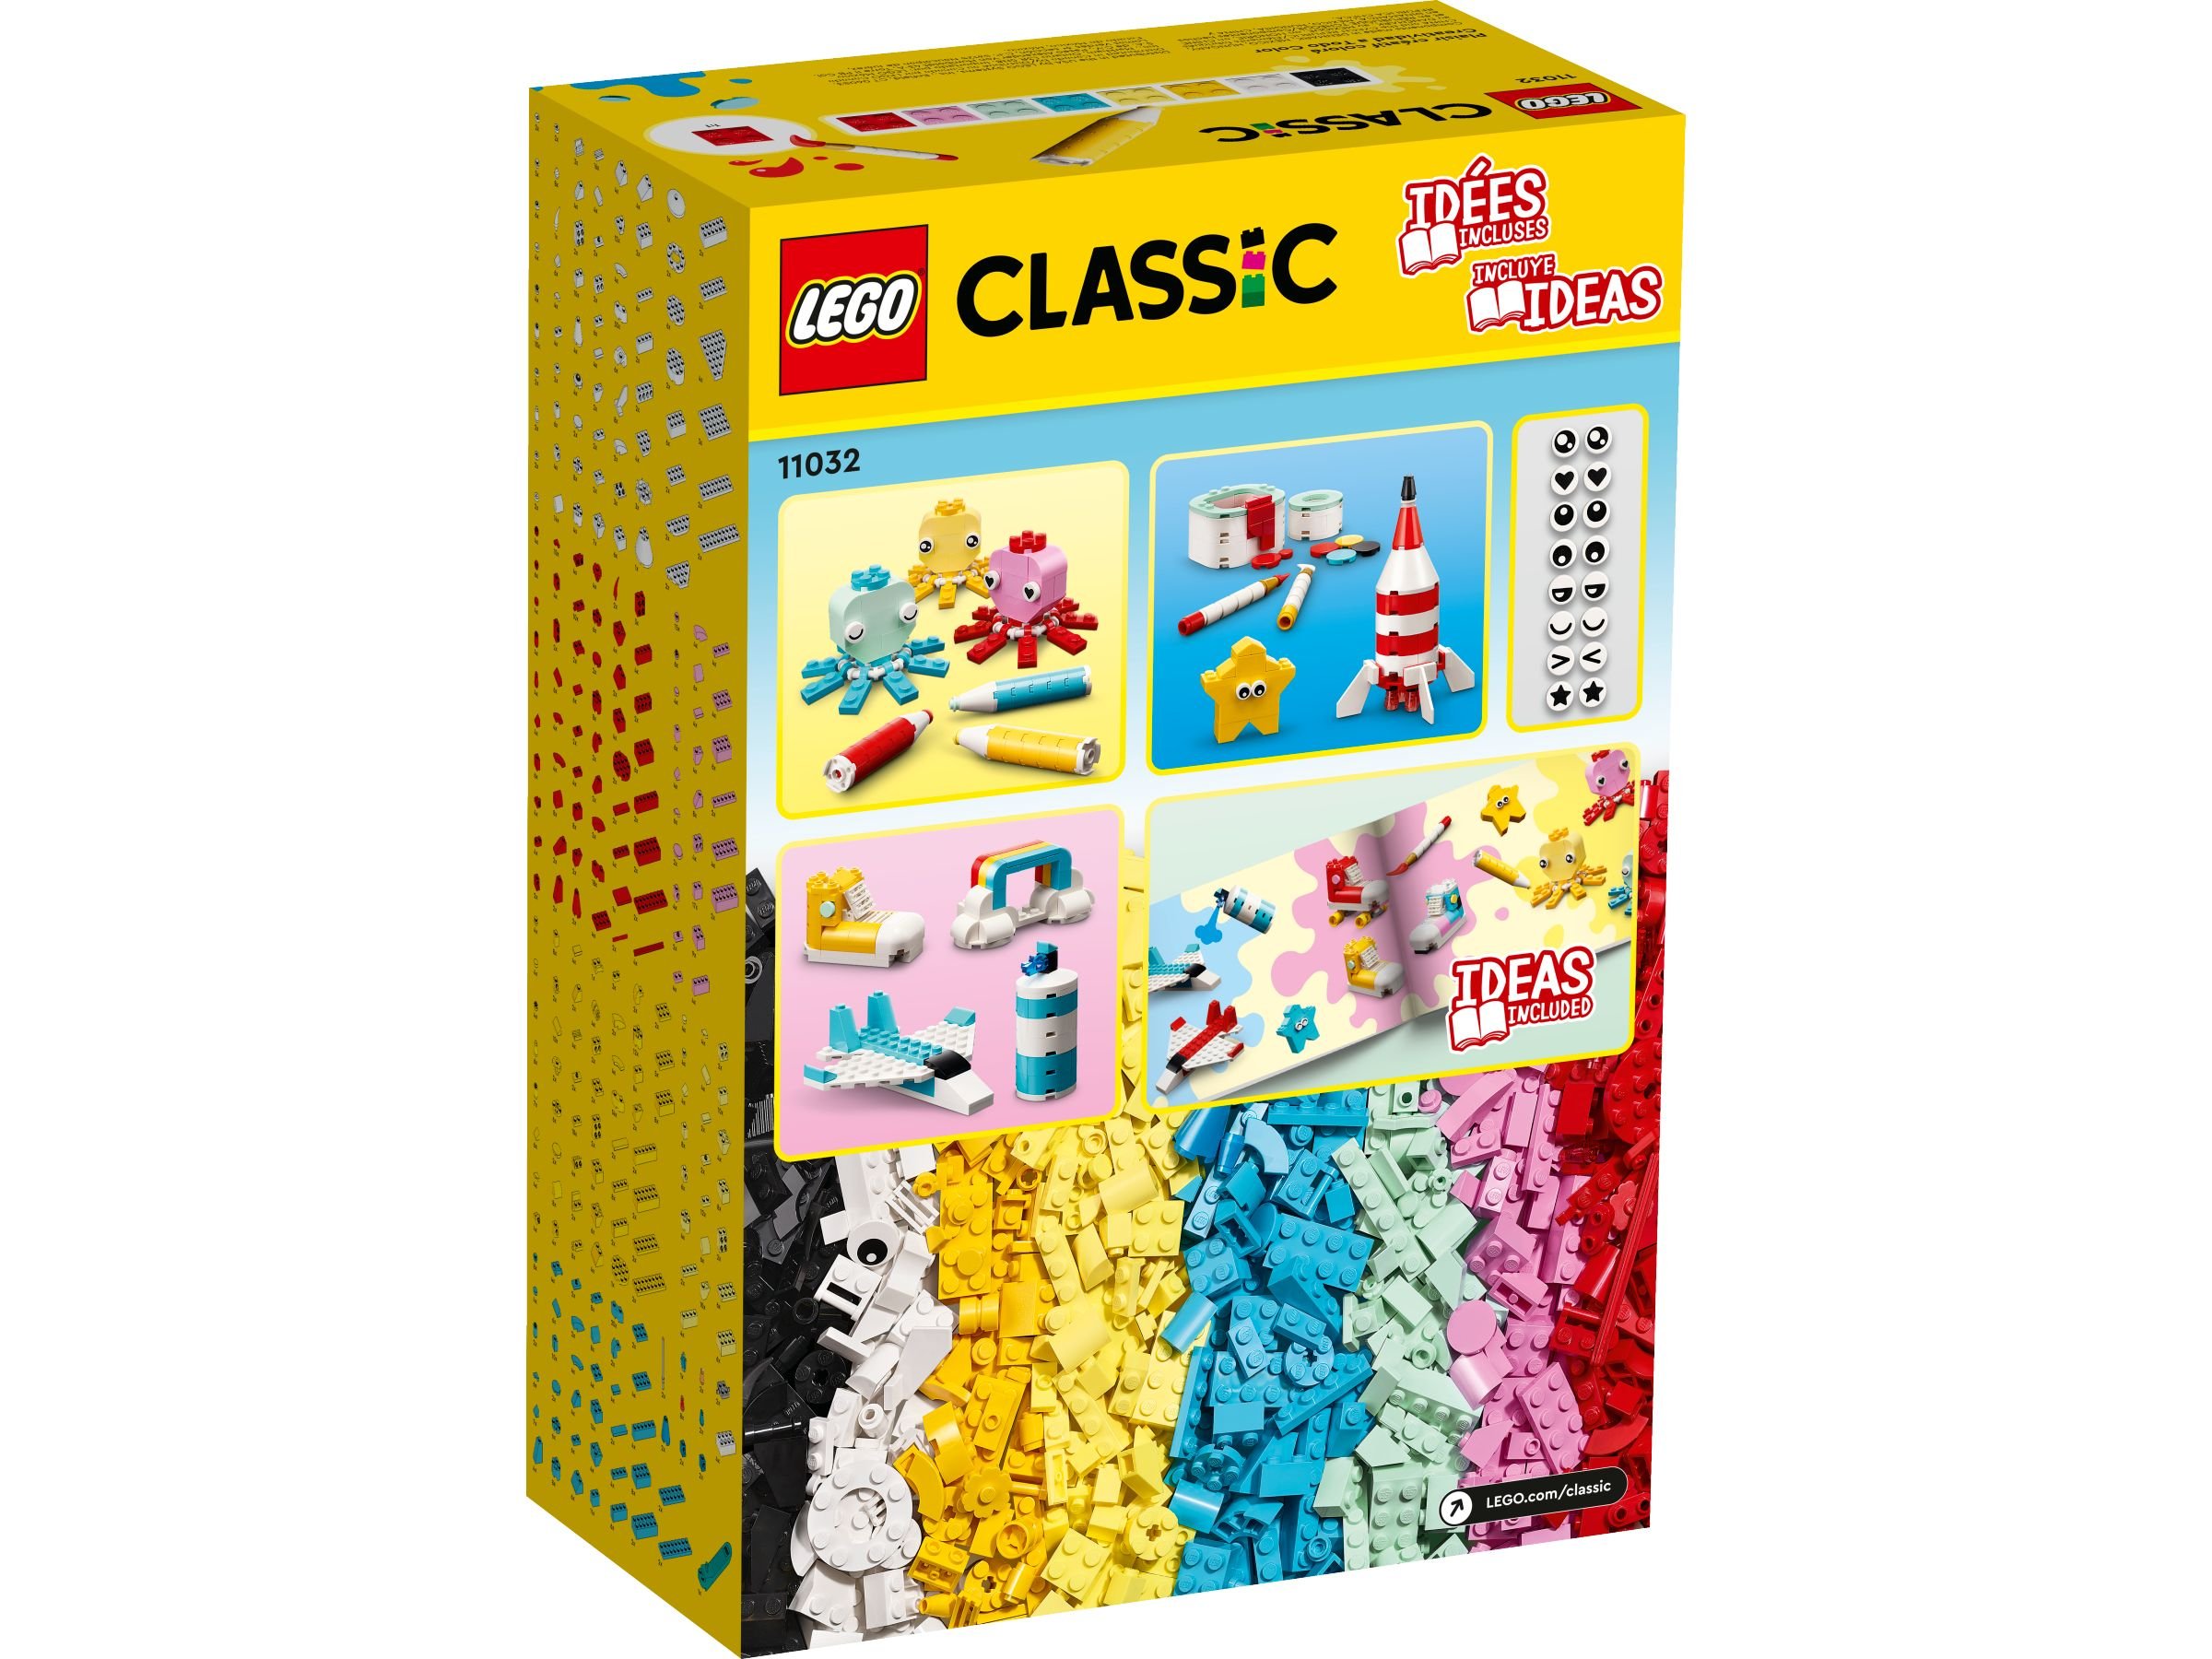 LEGO Classic 11032 Kreativ-Bauset mit bunten Steinen LEGO_11032_alt6.jpg